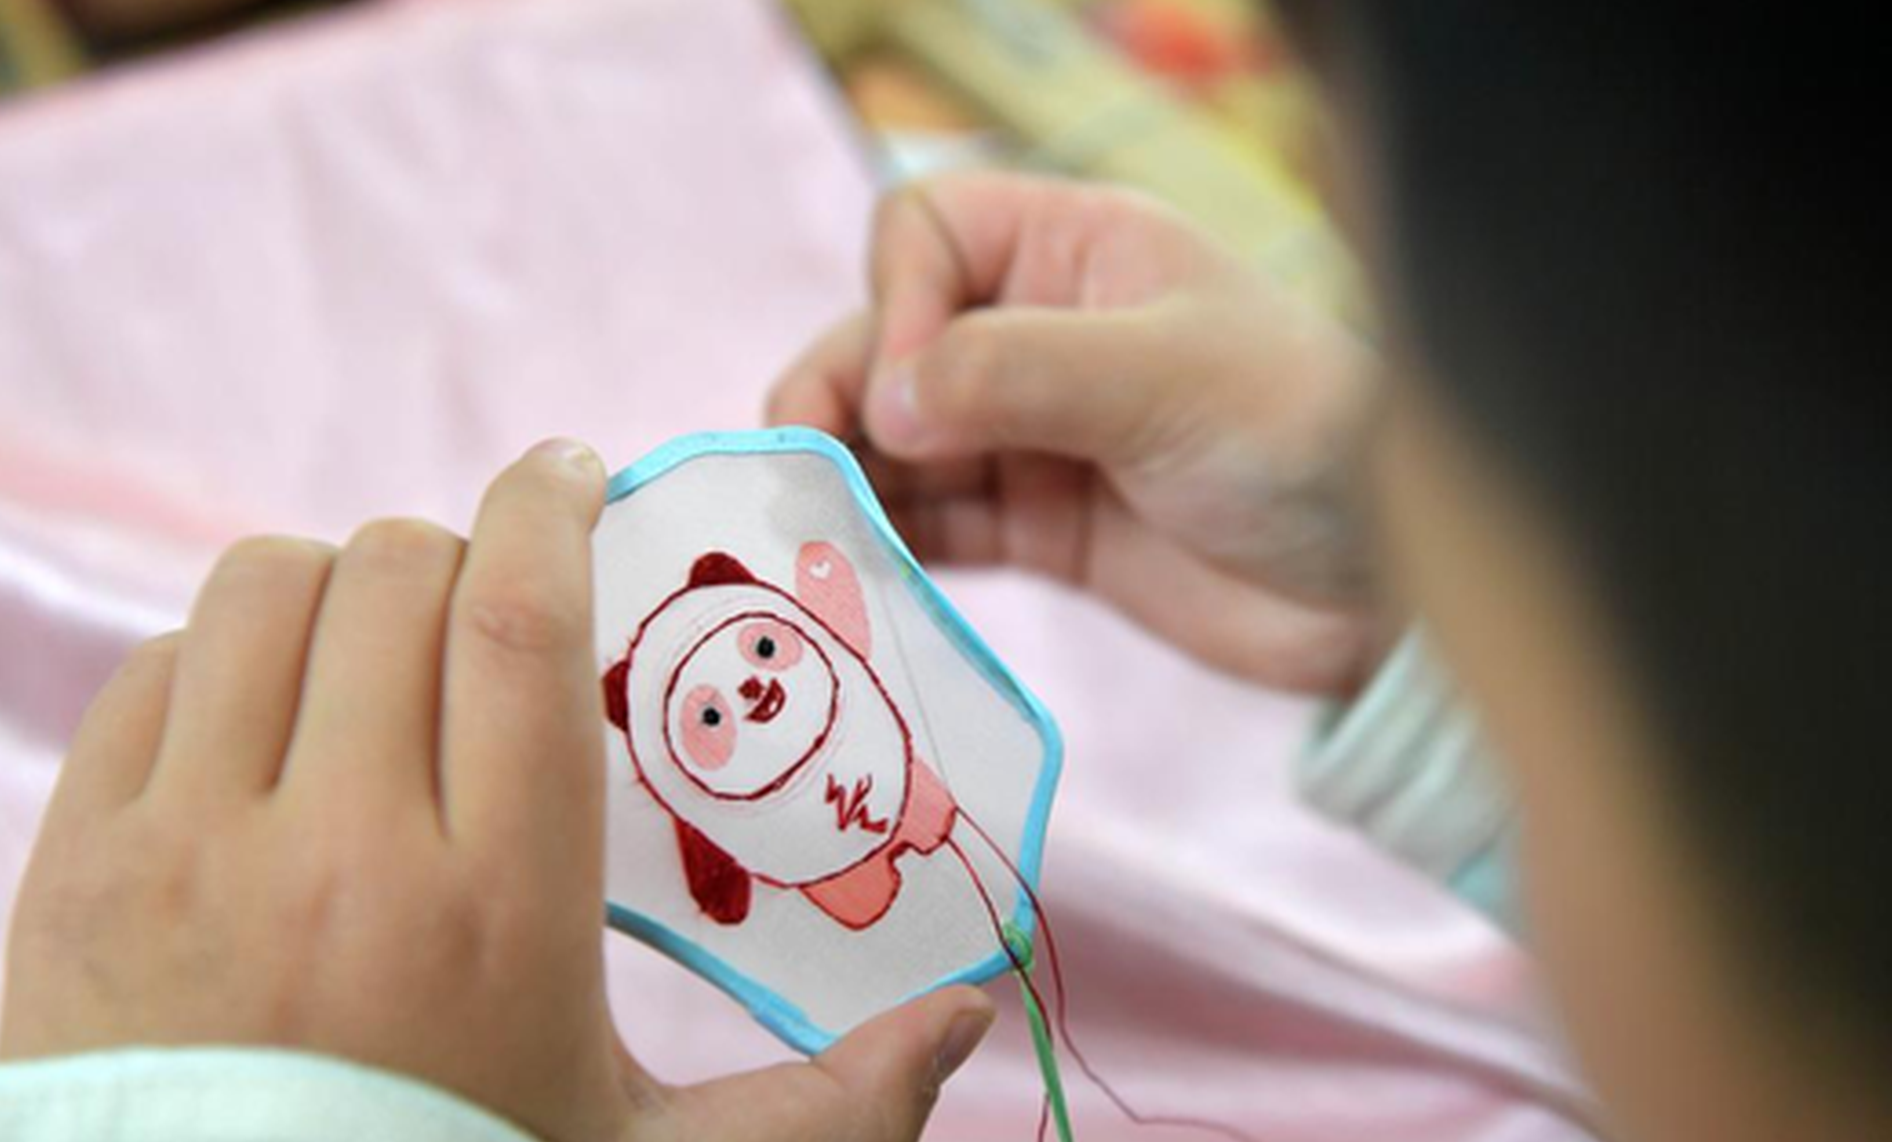 Jiangxi Embroidery adopts Bing Dwen Dwen look